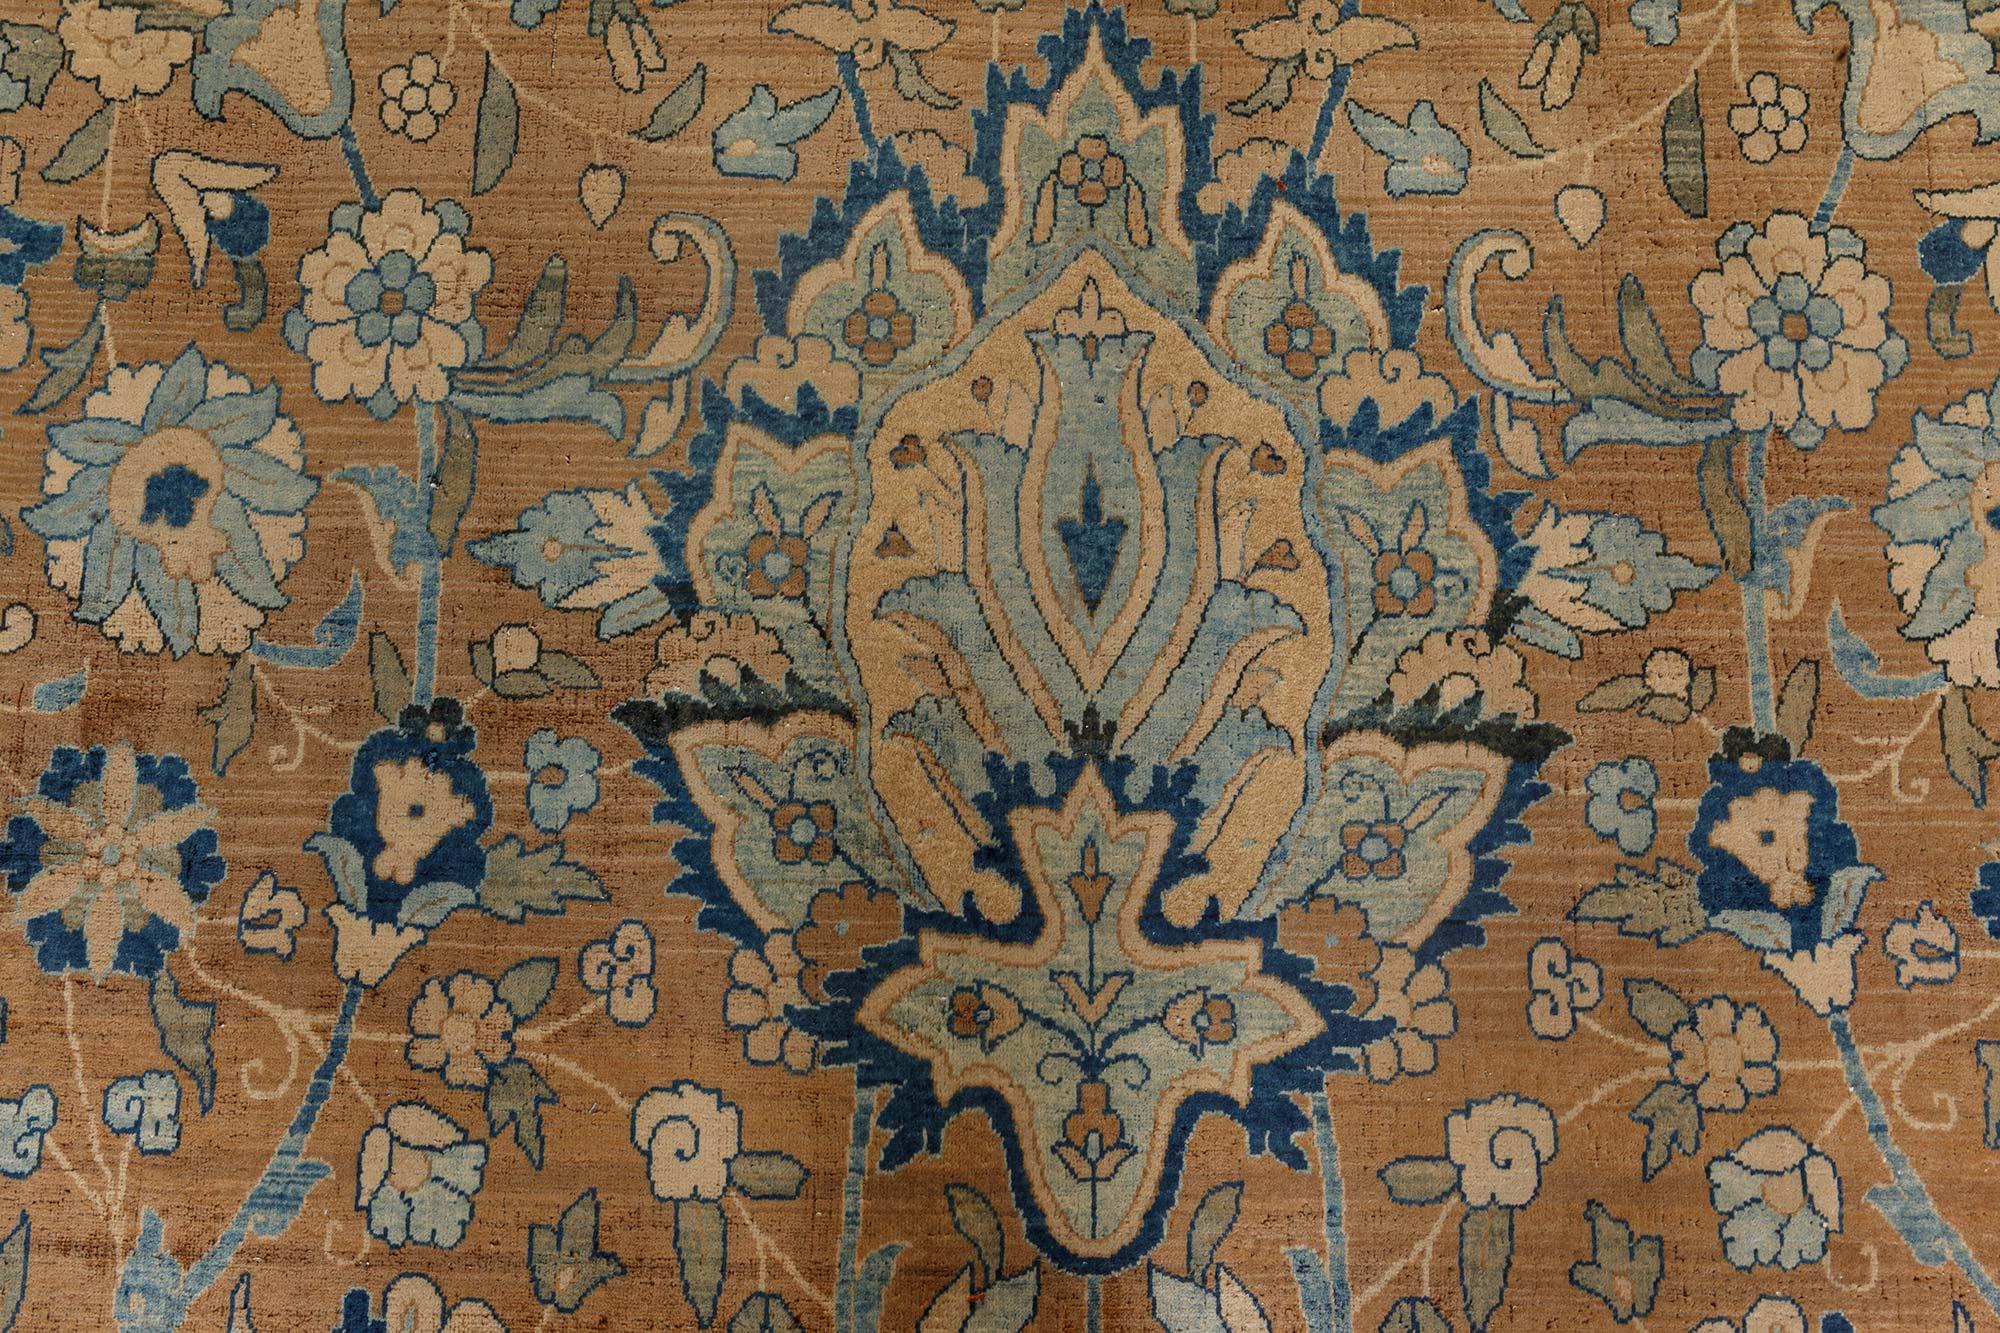 Fine Antique Persian Kirman handmade wool carpet (size adjusted)
Size: 11'9